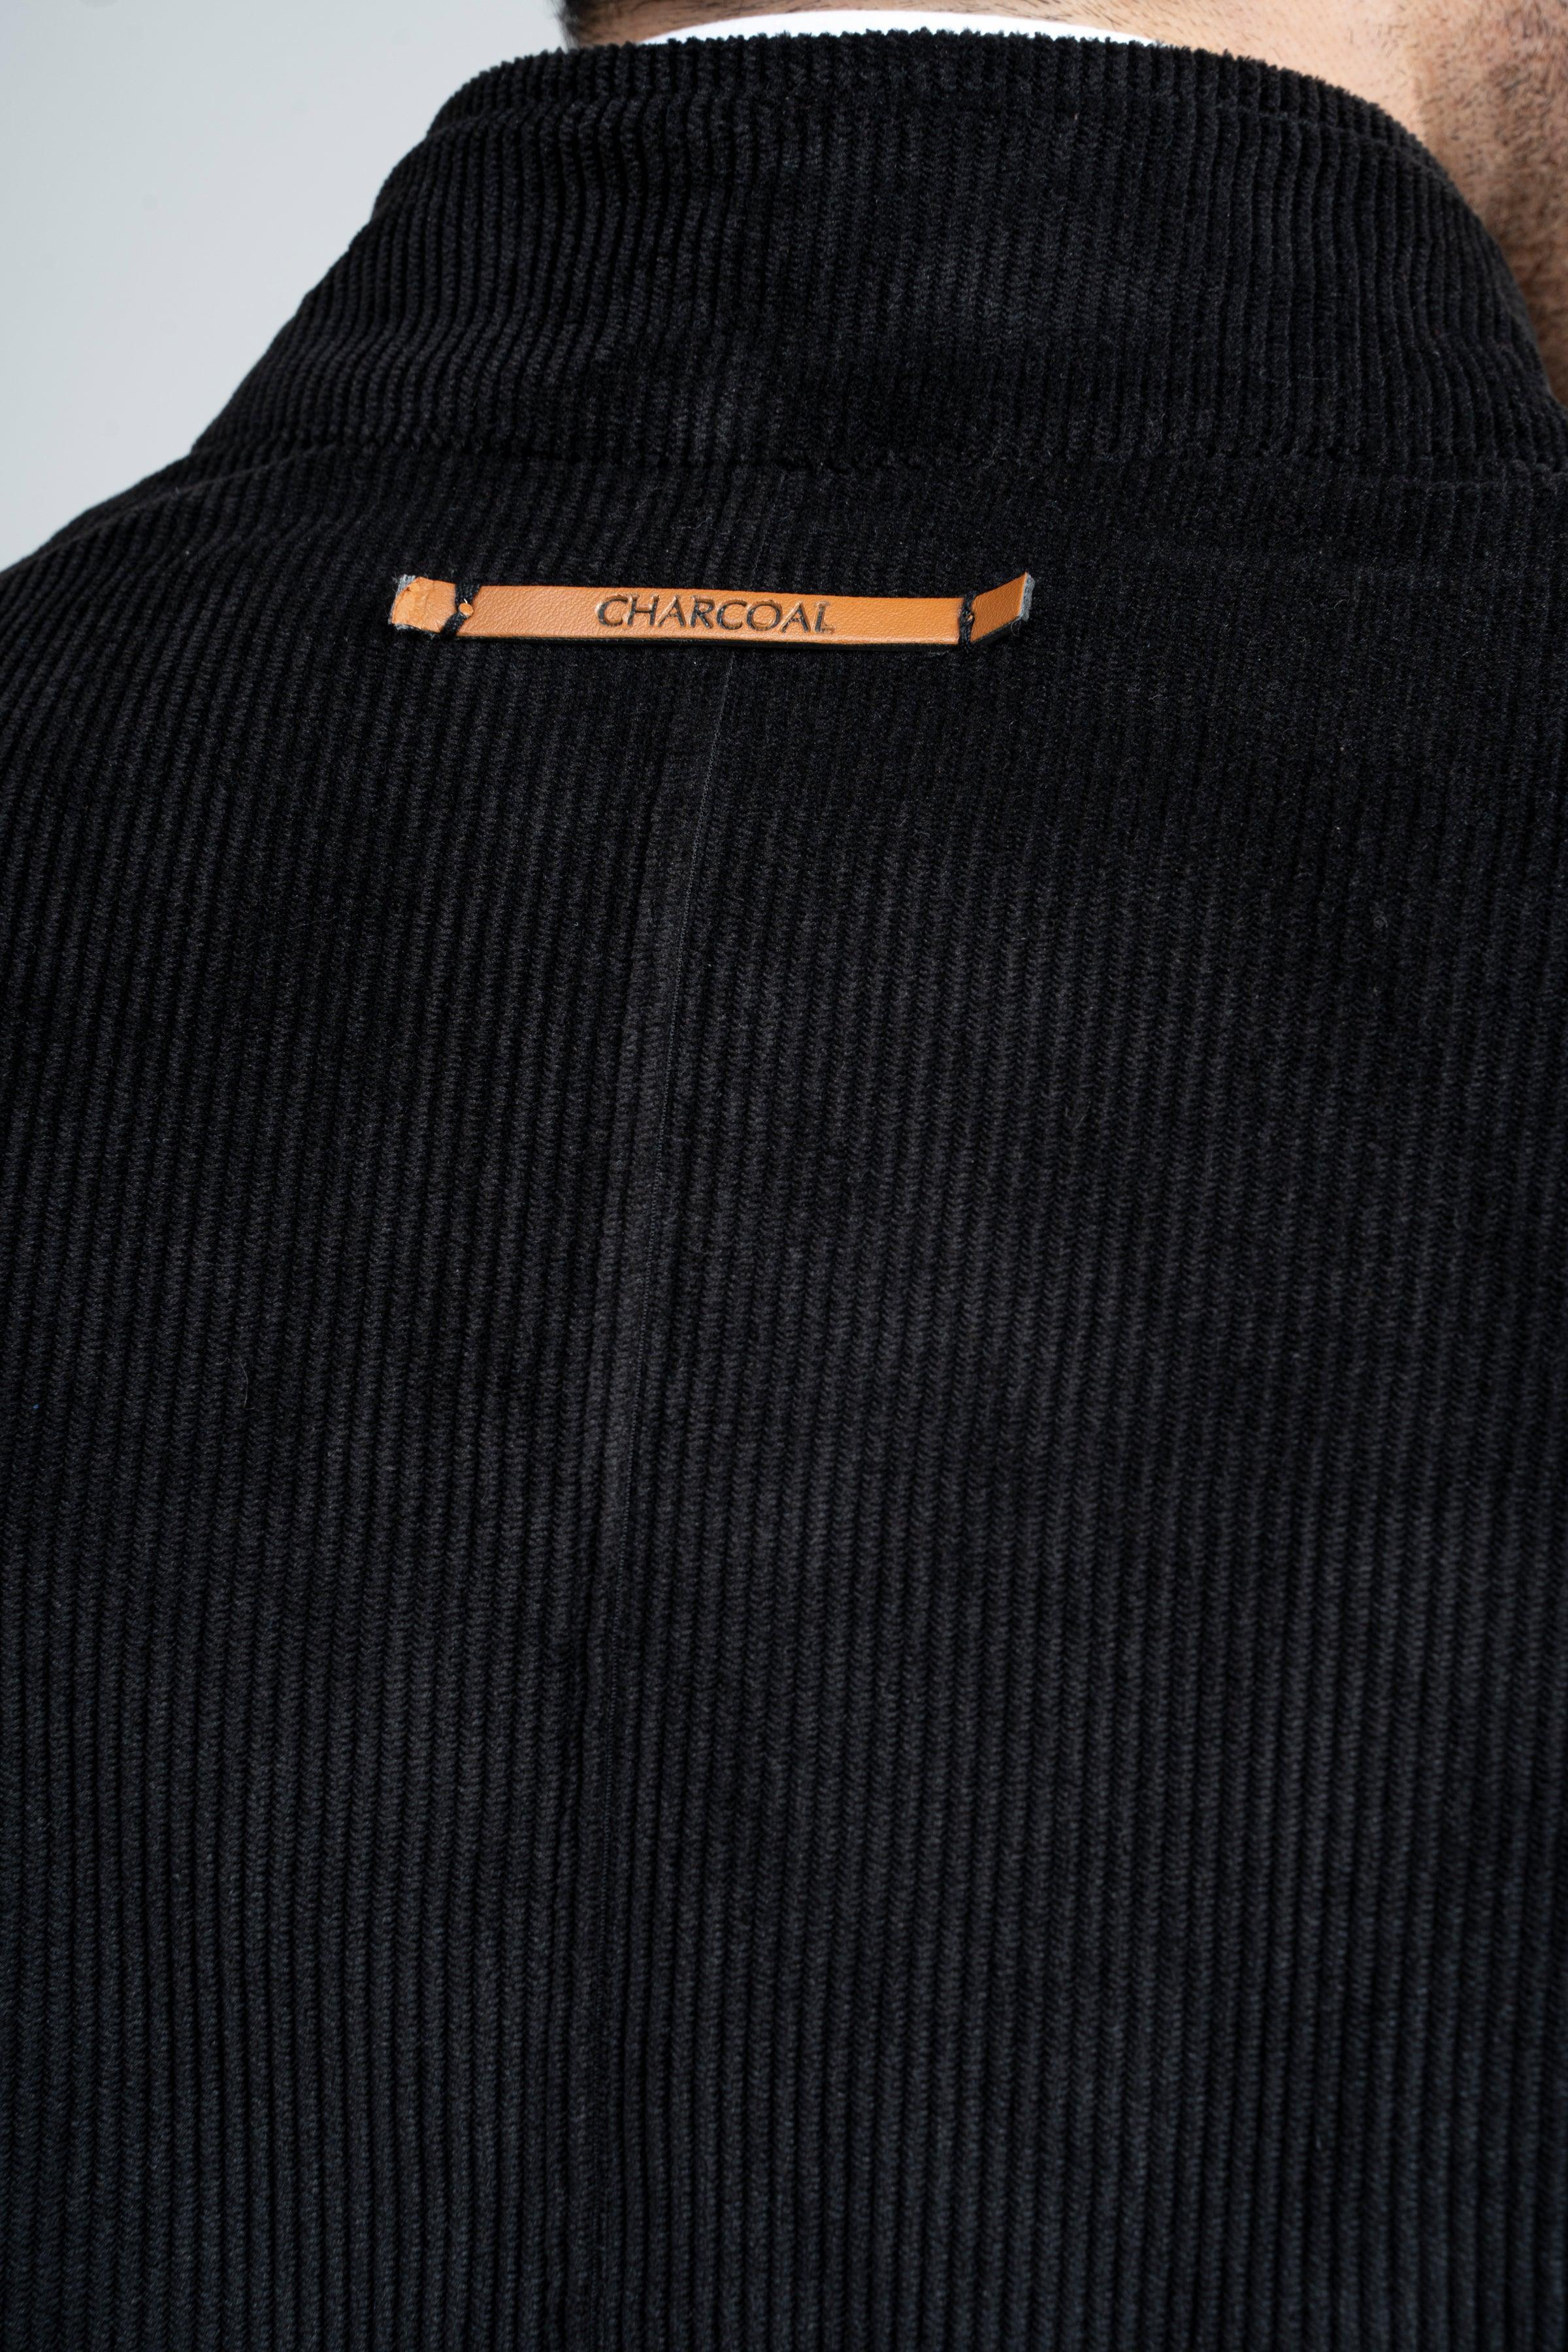 CORDUROY JACKET F/S BLACK at Charcoal Clothing